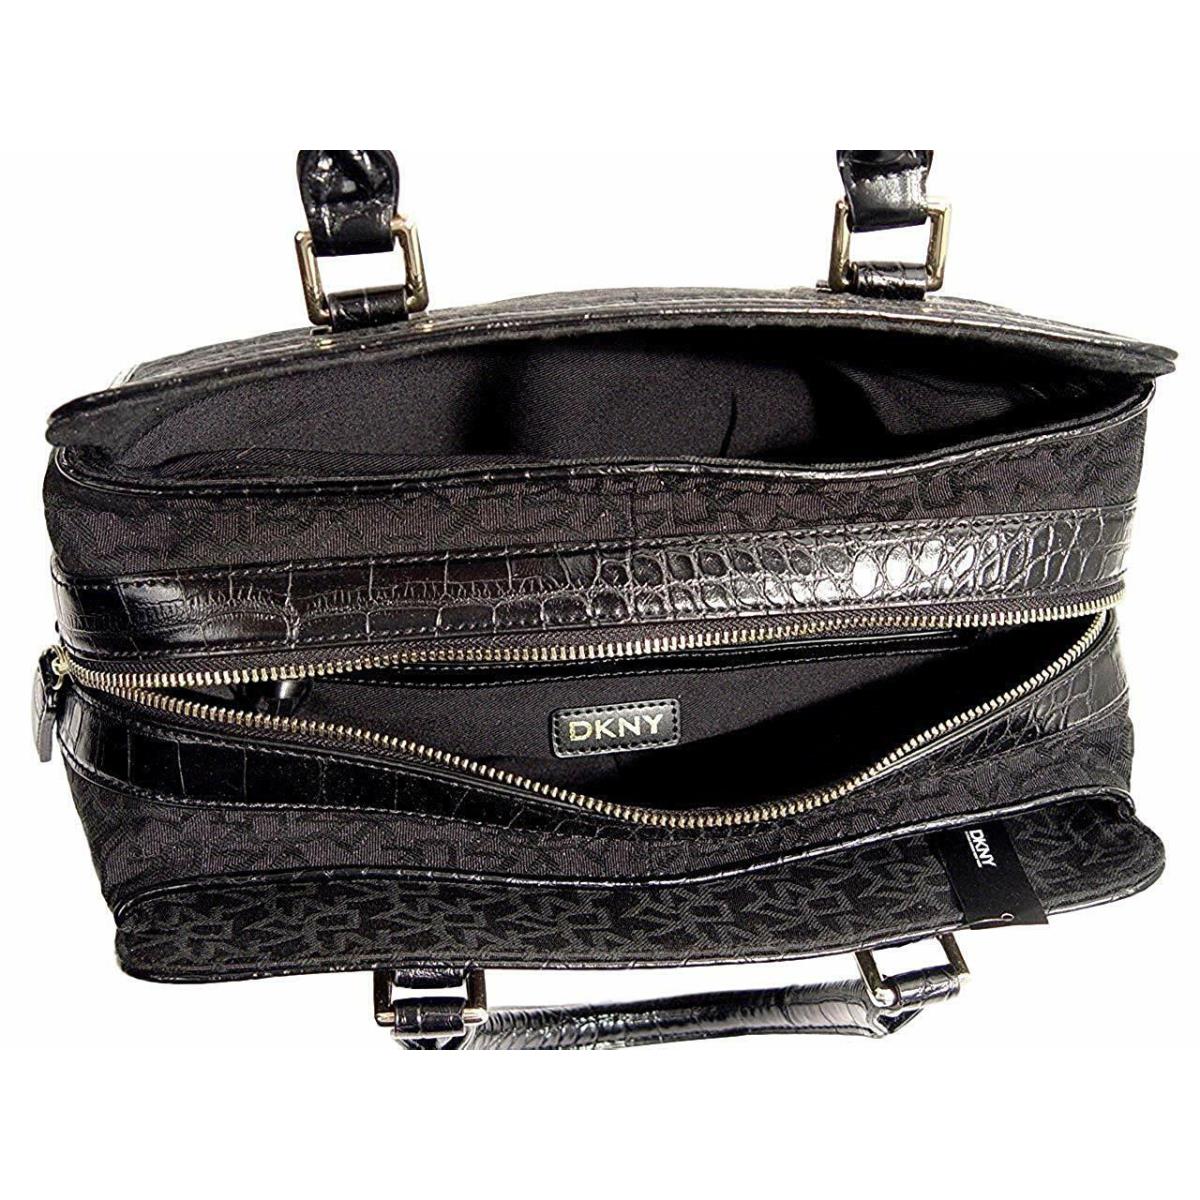 DKNY  bag   - Black Exterior